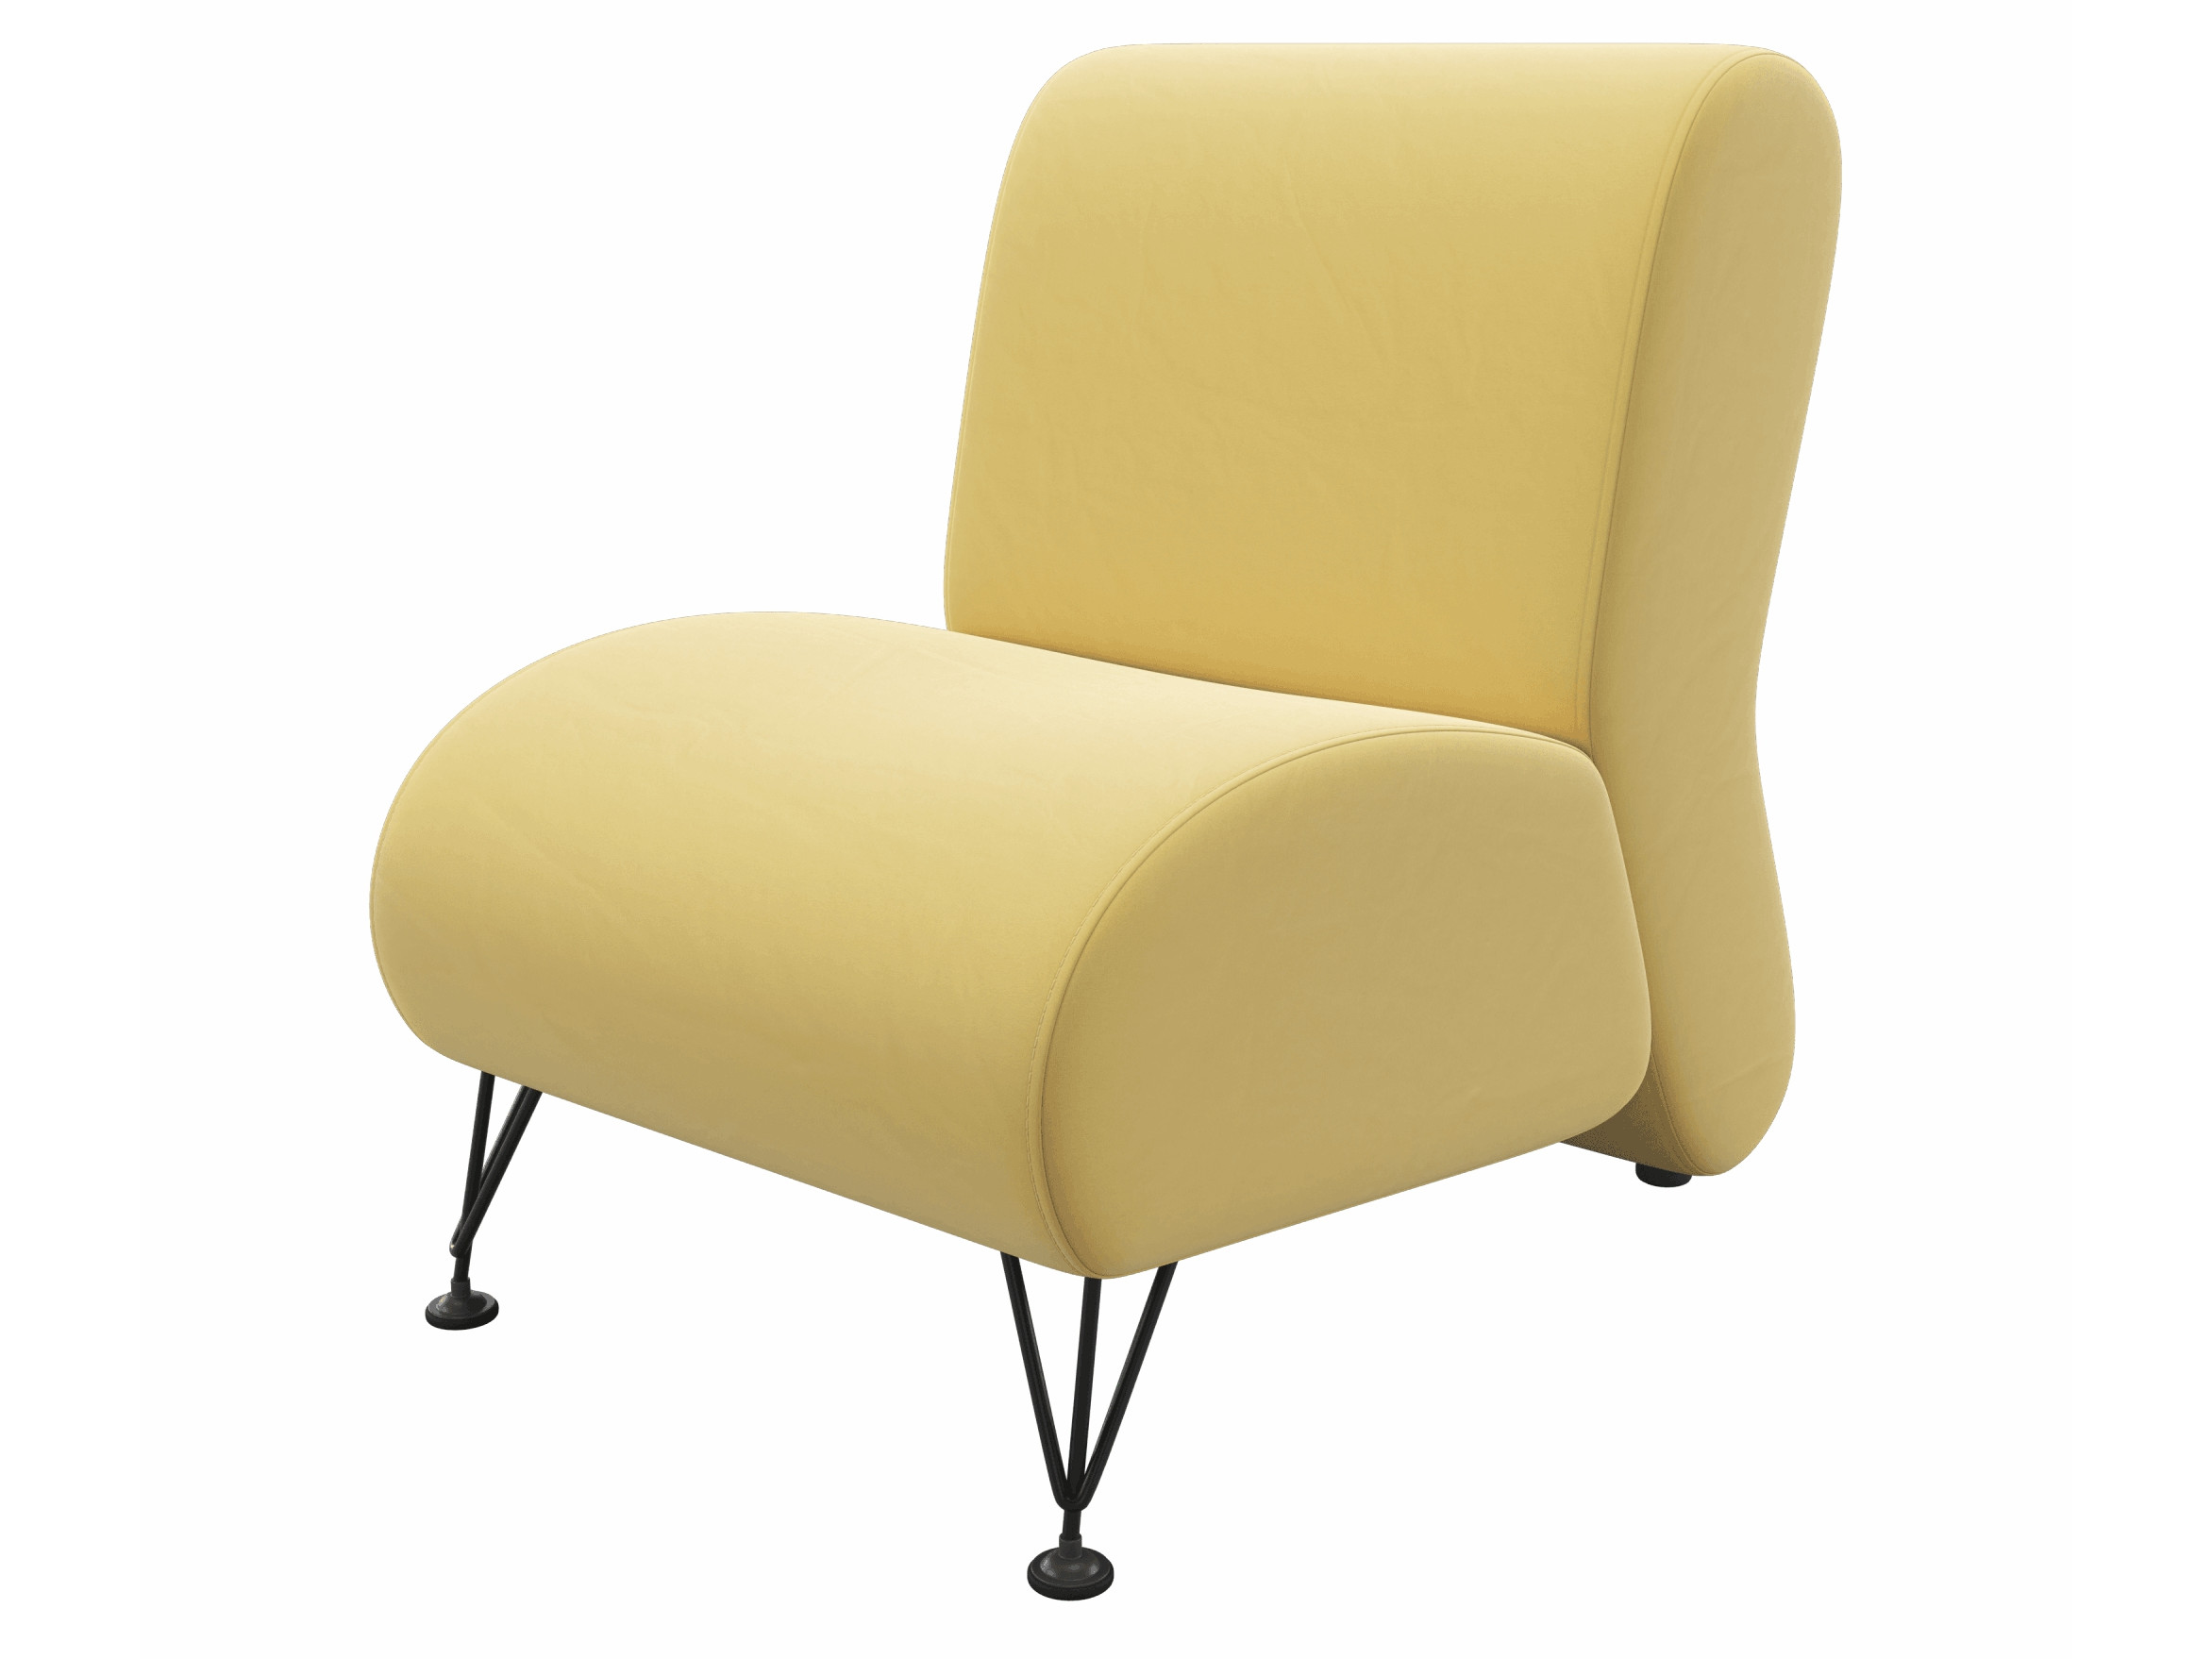 Мягкое дизайнерское кресло Pati желтый MebelVia желтый, Велюр цена и фото